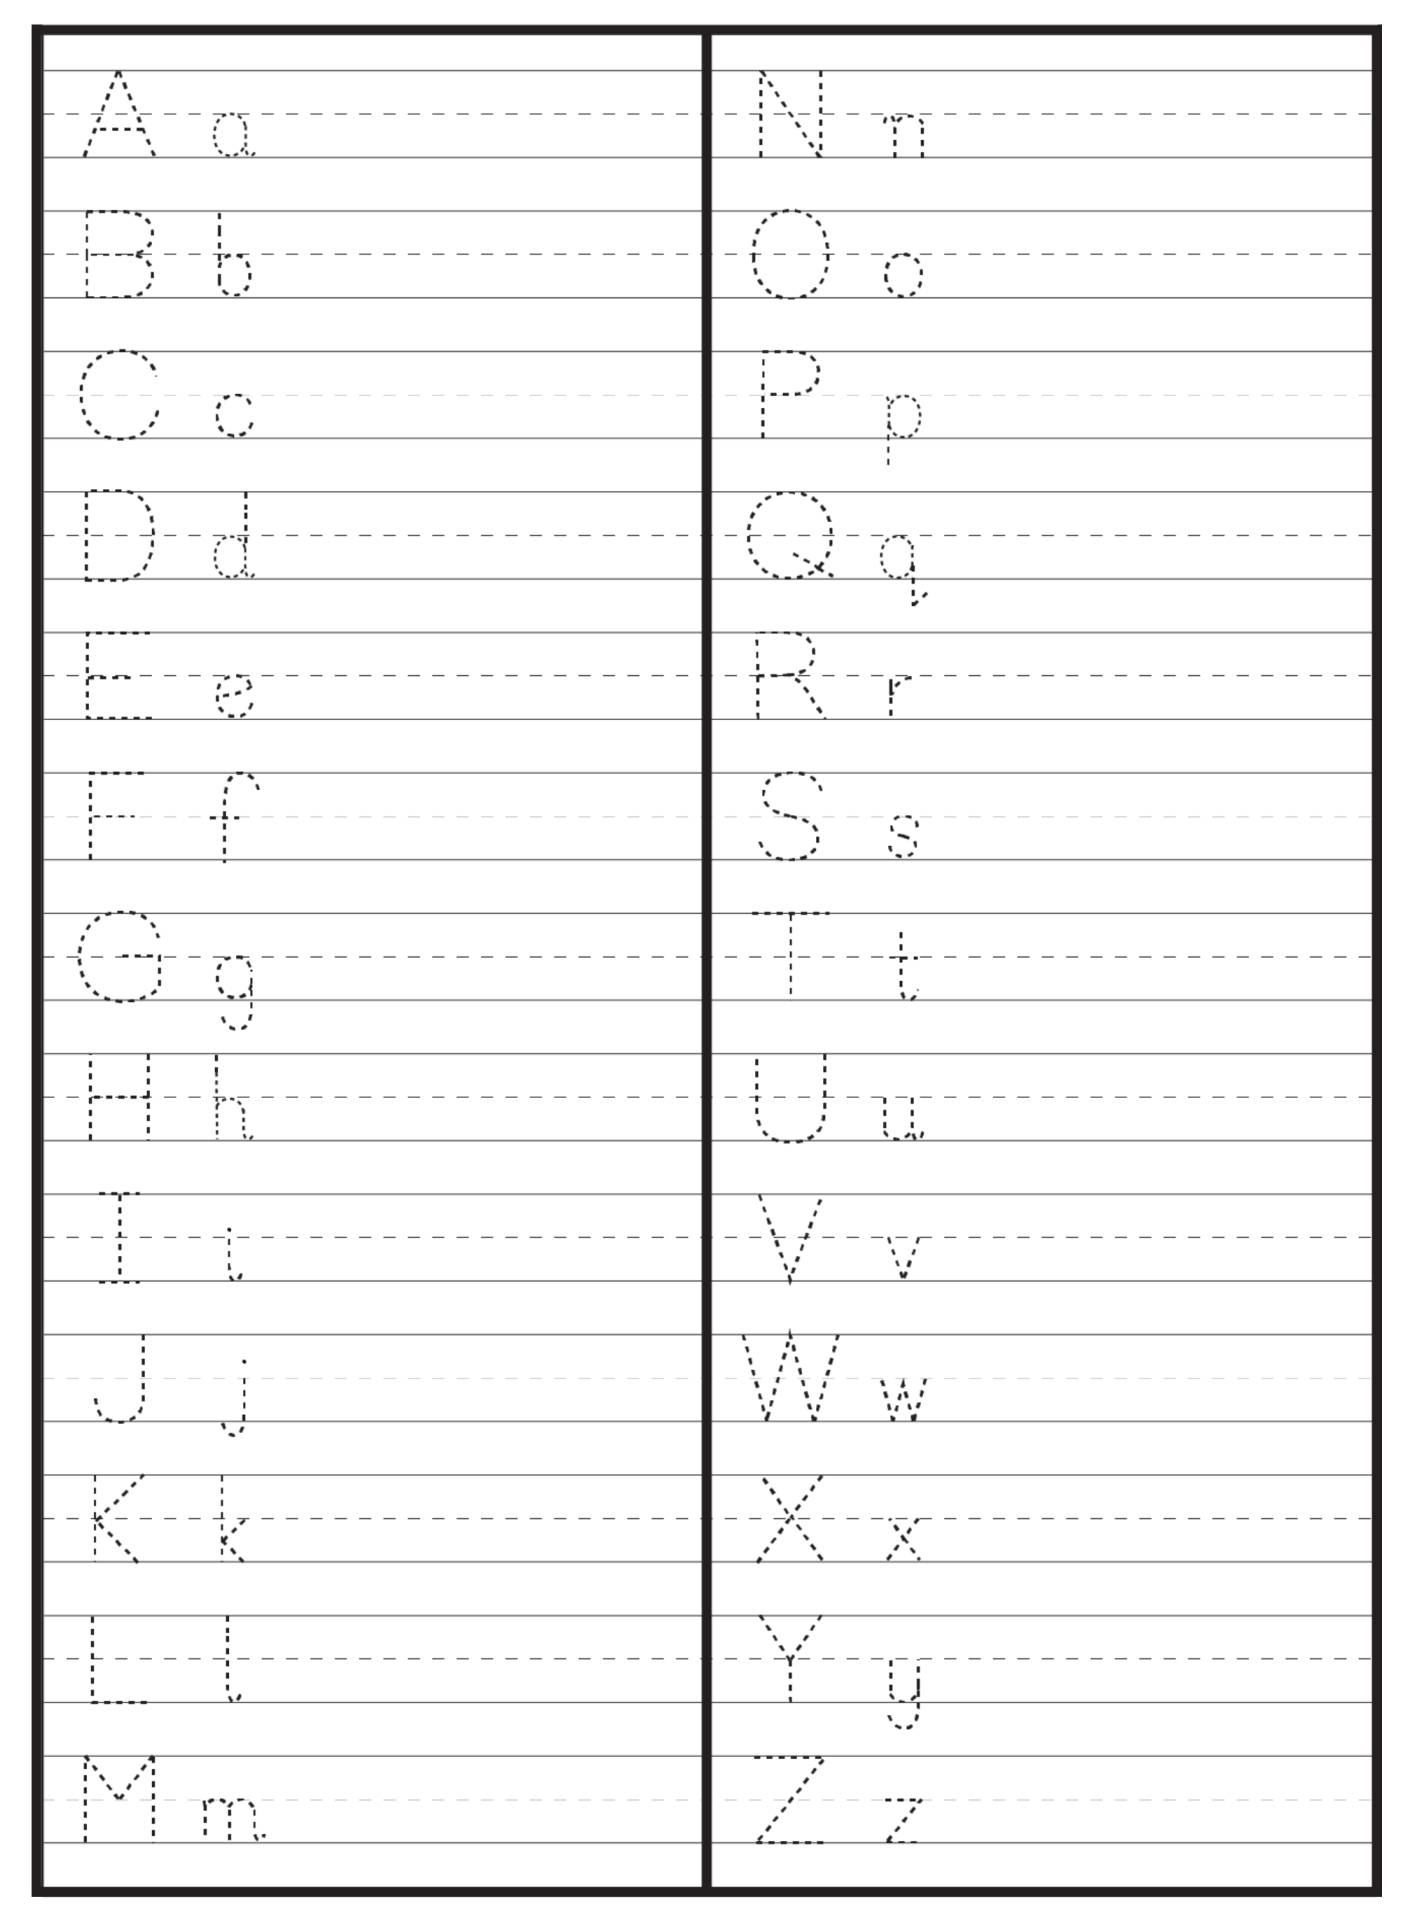 9 Best Images of Printable Alphabet Worksheets AZ - Alphabet Letter ...